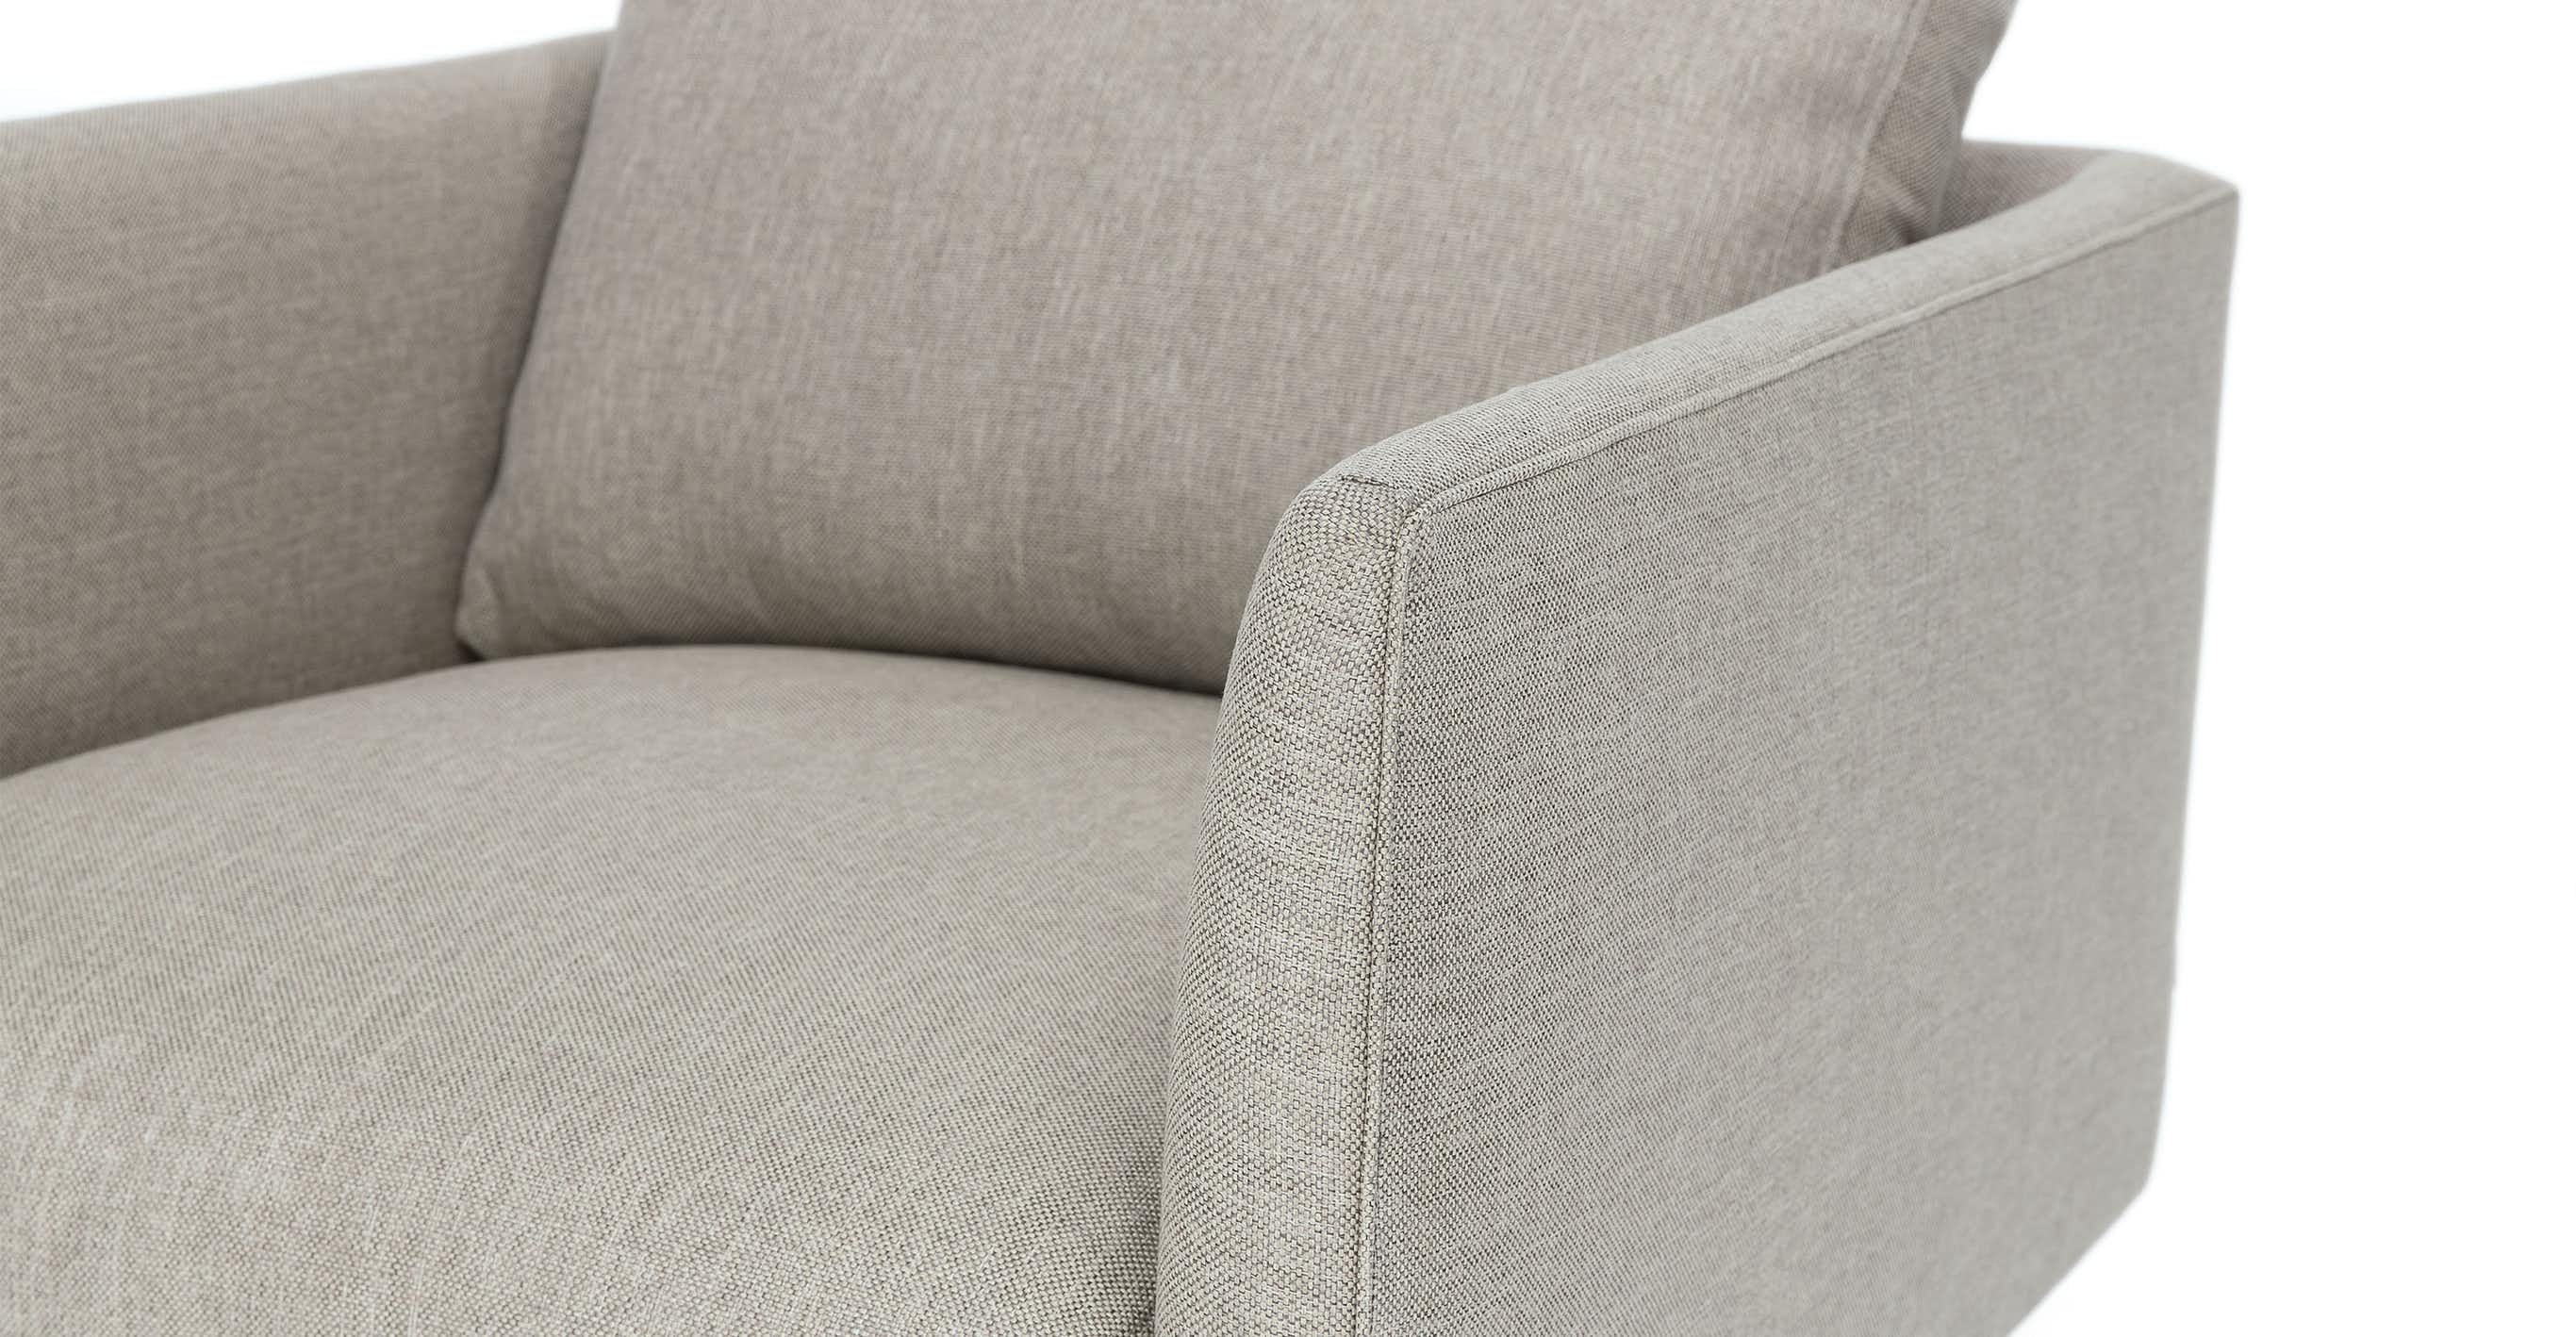 Burrard Seasalt Gray Chair - Image 2